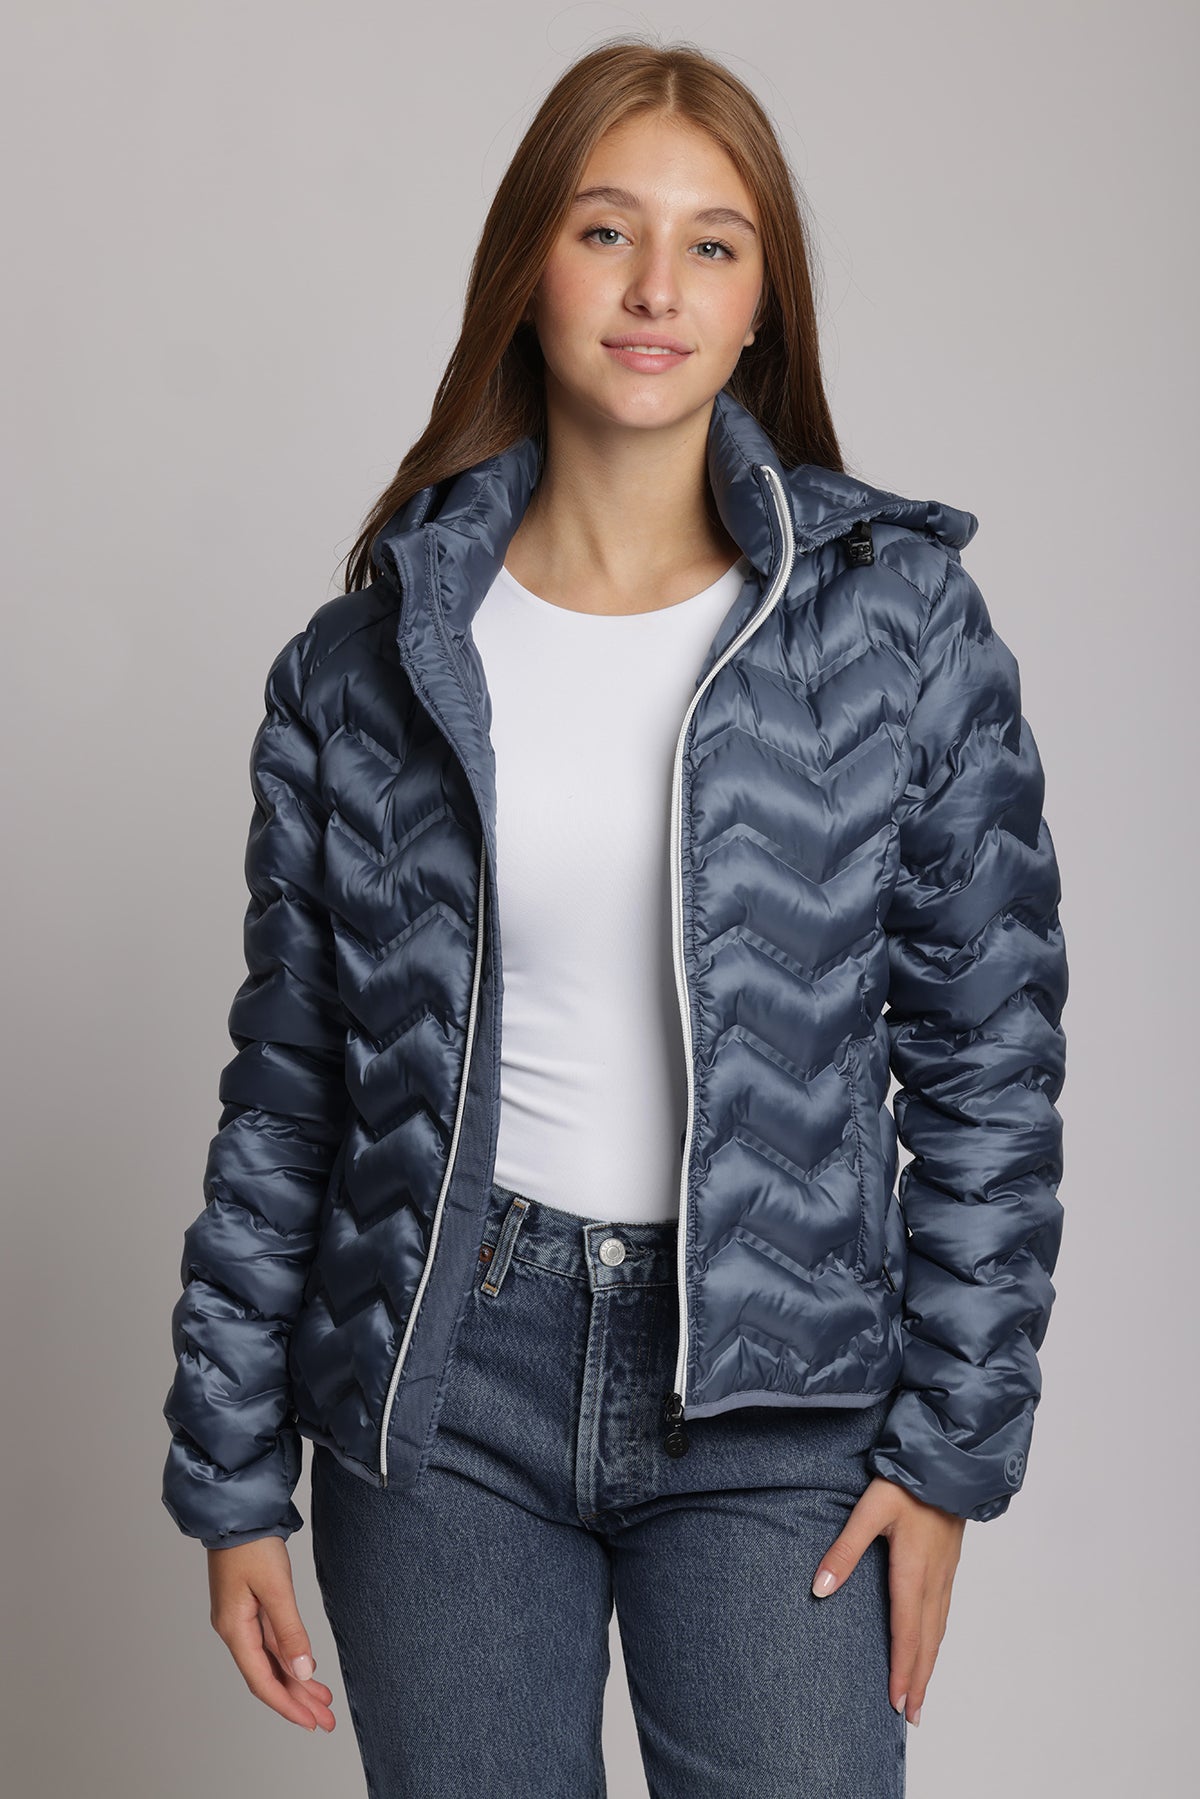 Women's packable puffer jacket in metallic cobalt - O8Lifestyle